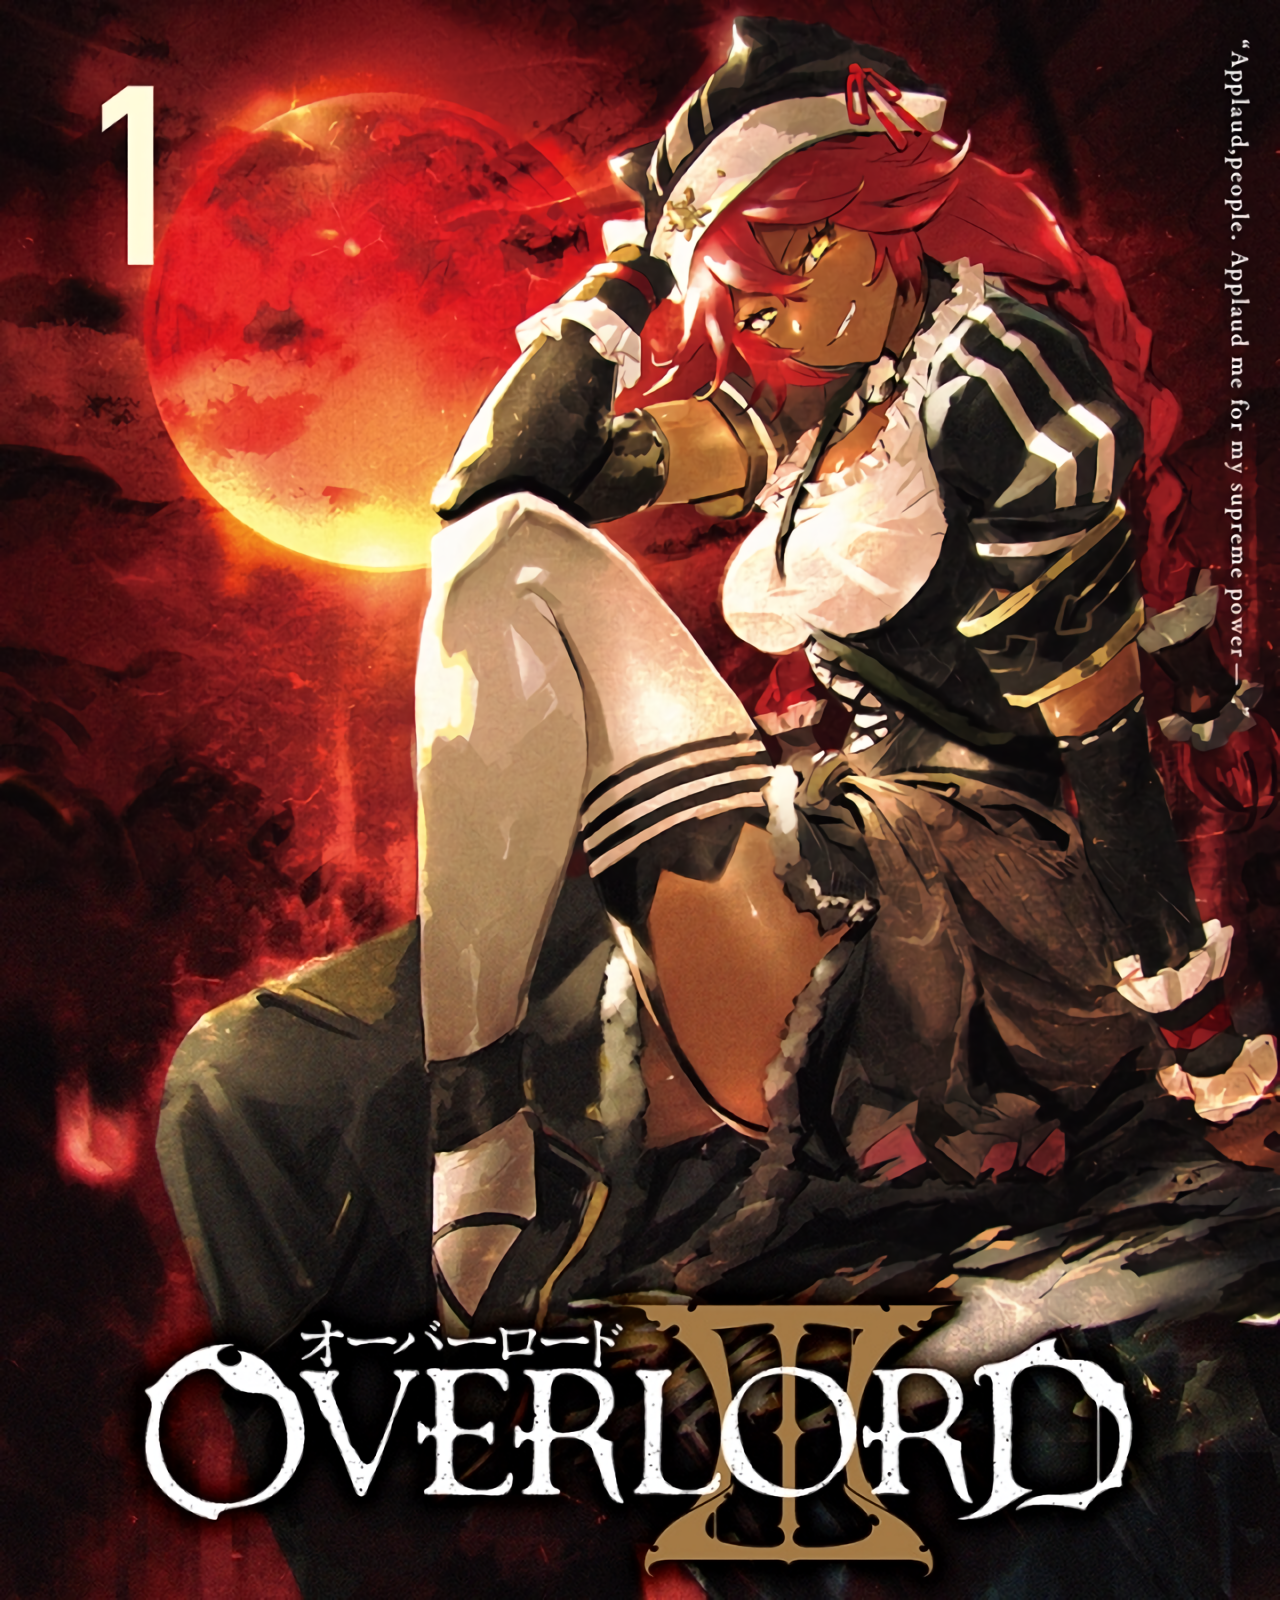 Best Buy: Overlord III: Season Three [Blu-ray/DVD]